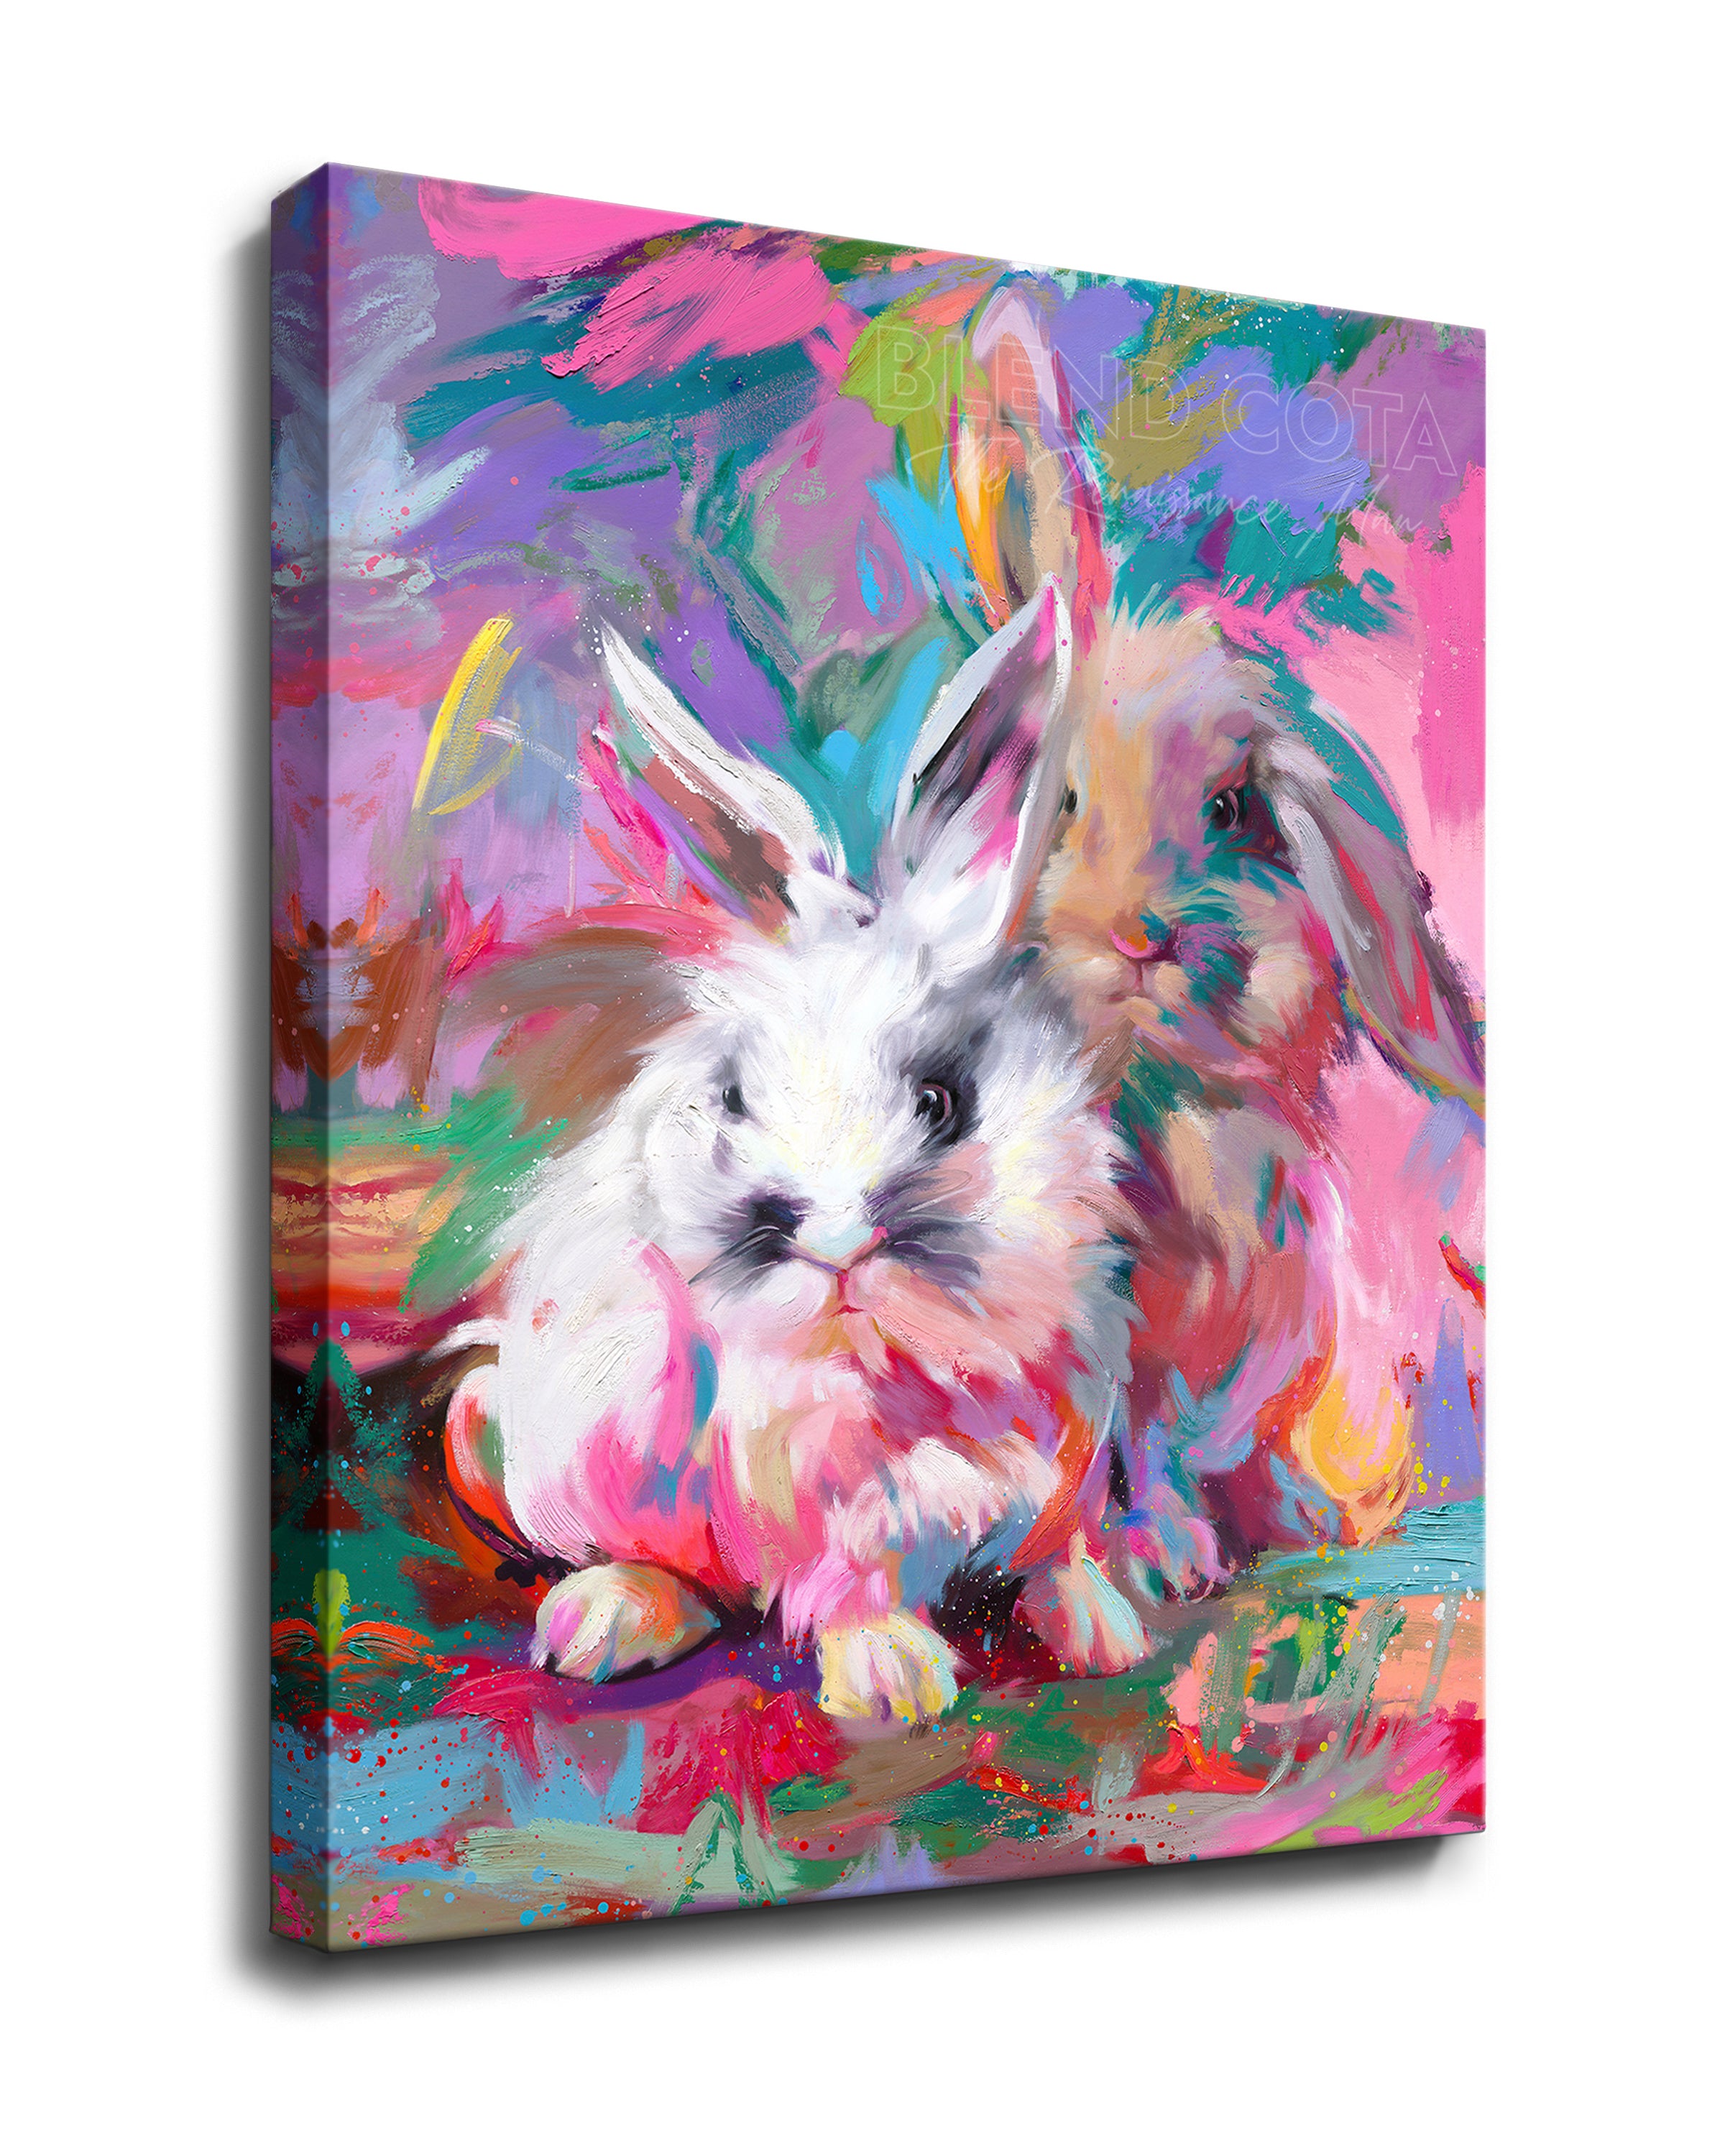 Fluffy Buns - Blend Cota Art Print on Canvas - Blend Cota Studios